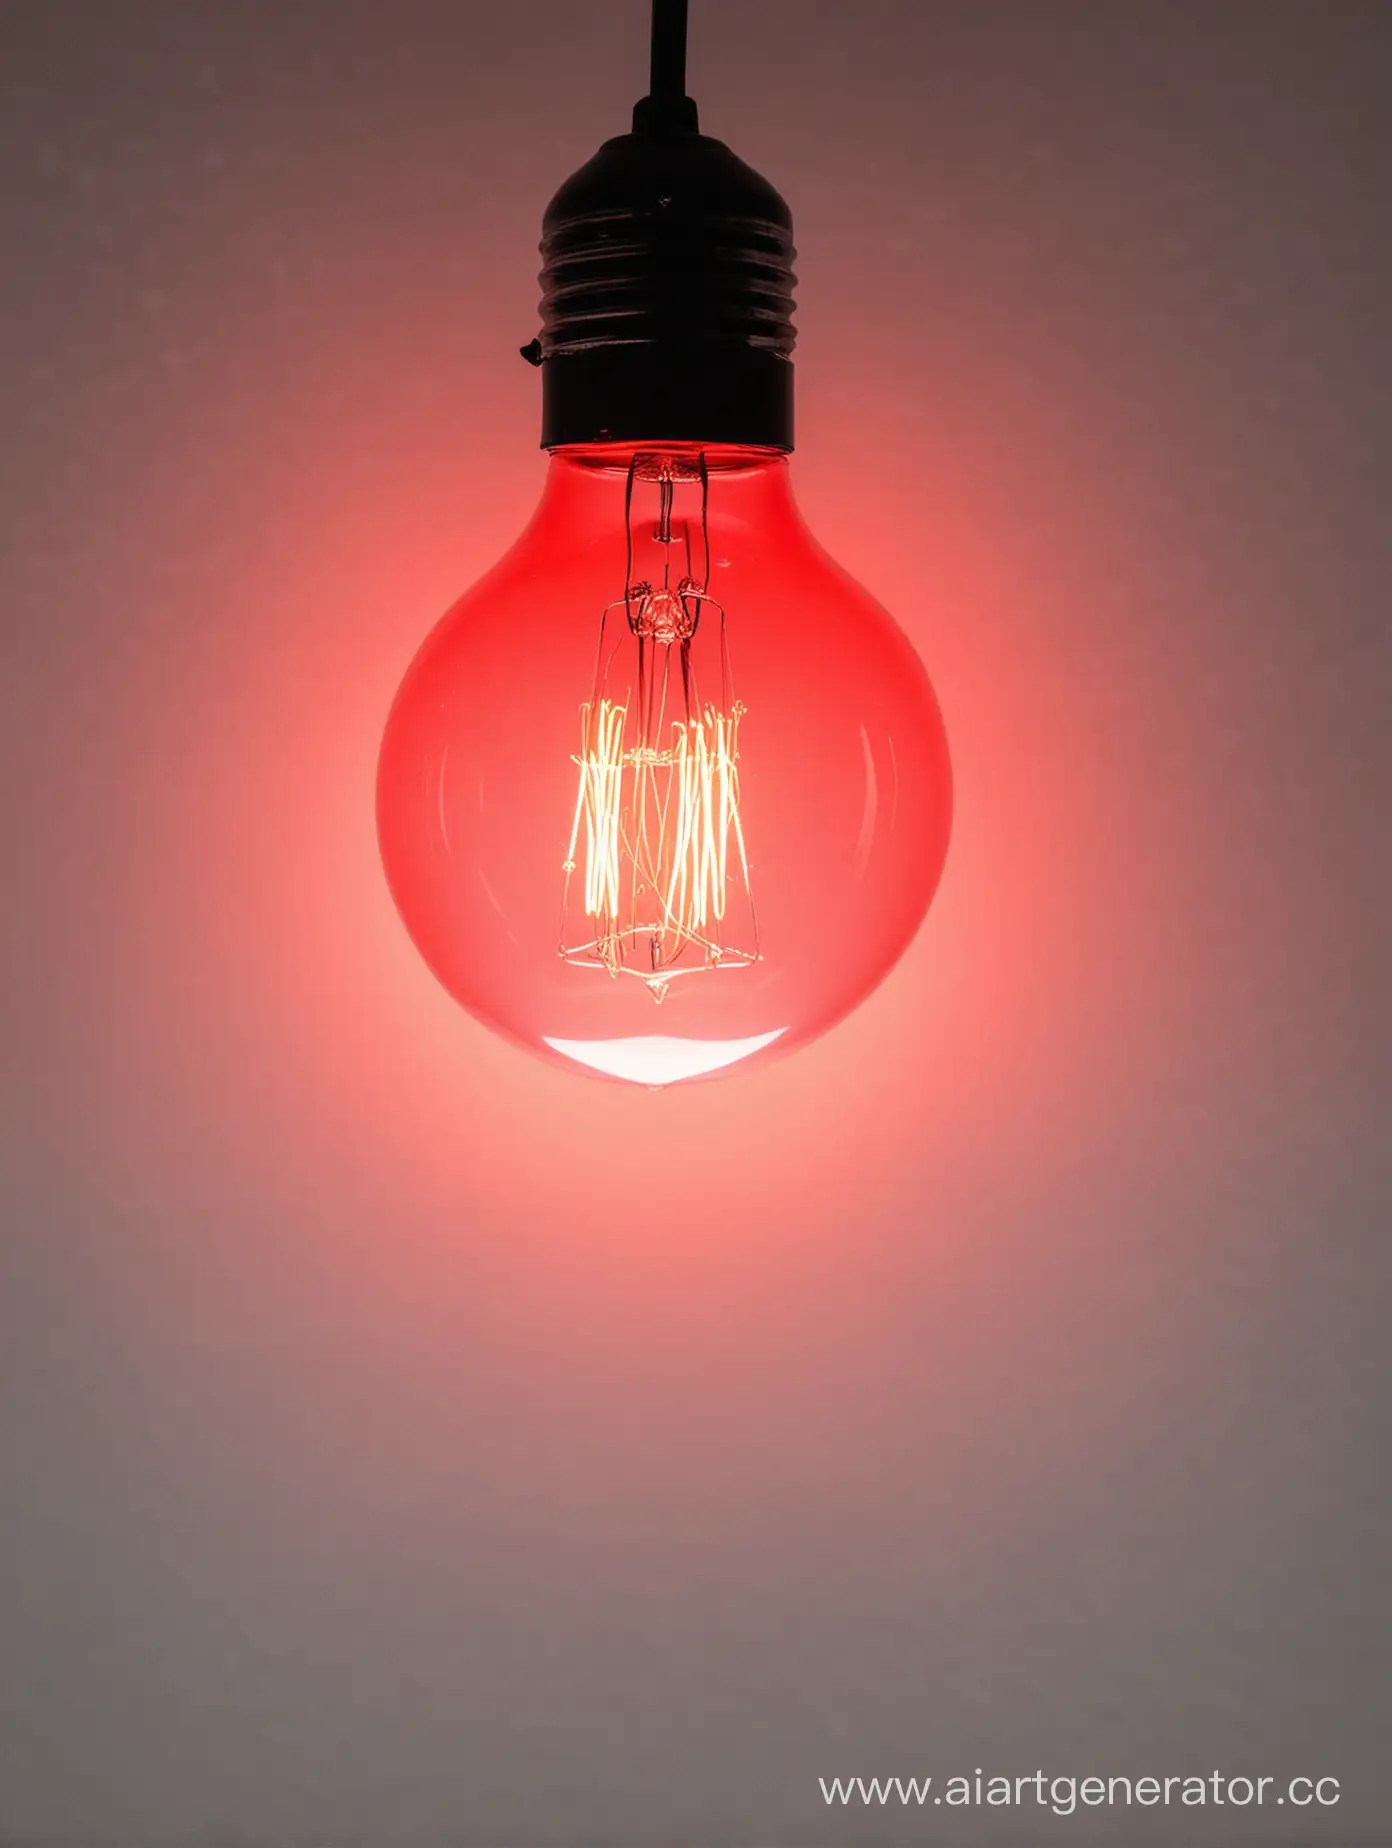 Bright-Red-Light-Bulb-Illuminating-the-Darkness